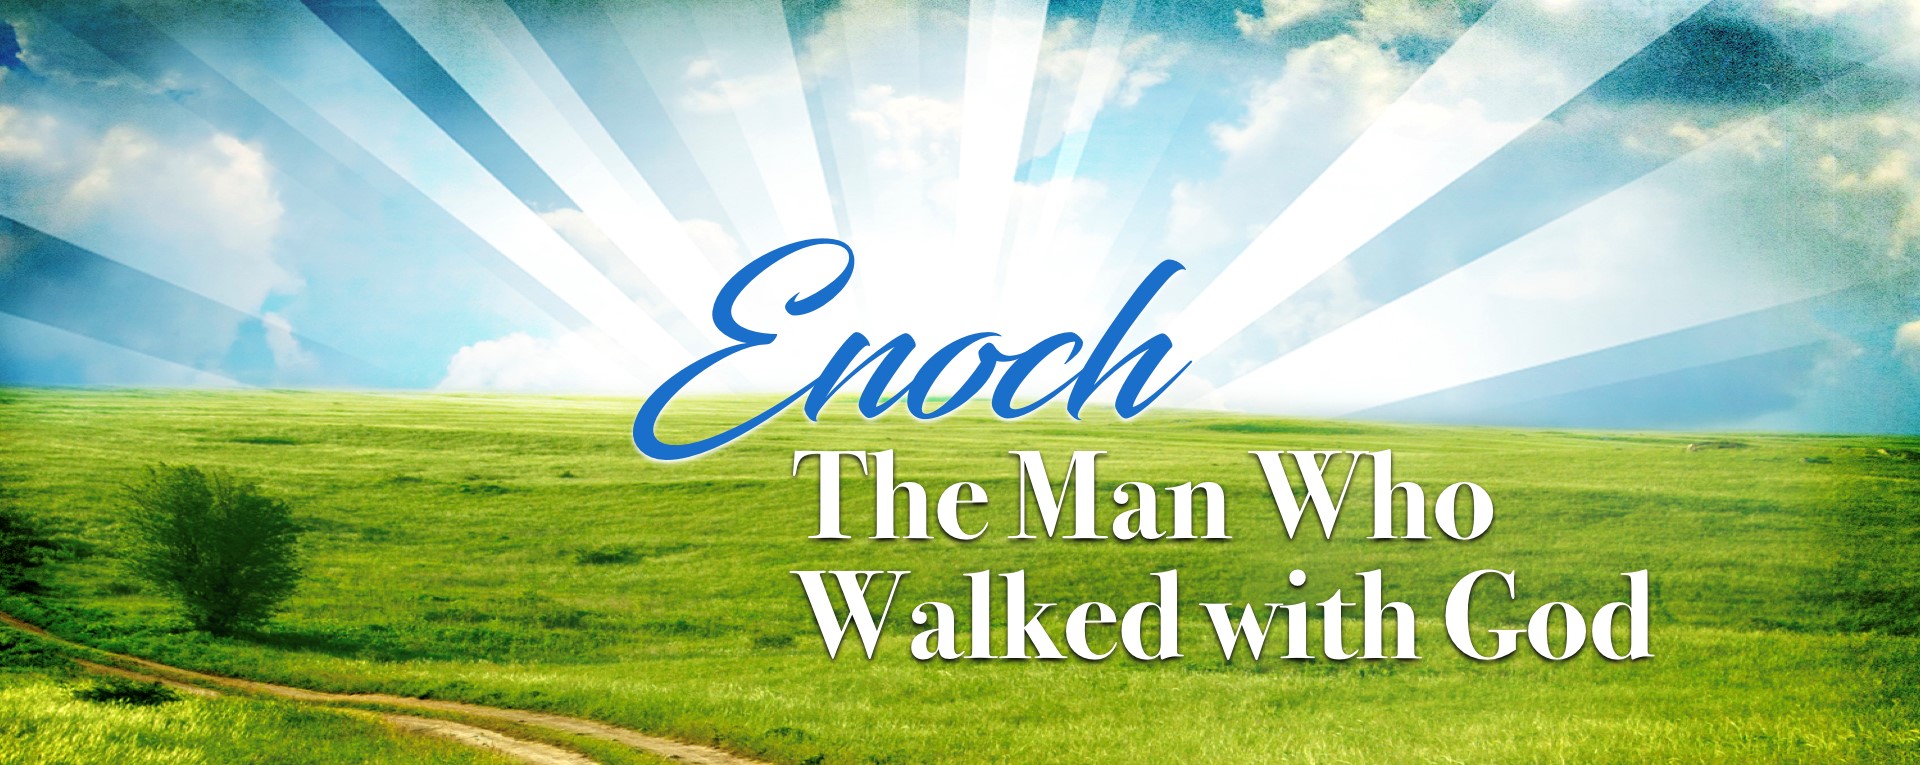 Are We Enoch Ready? | The Heaton File